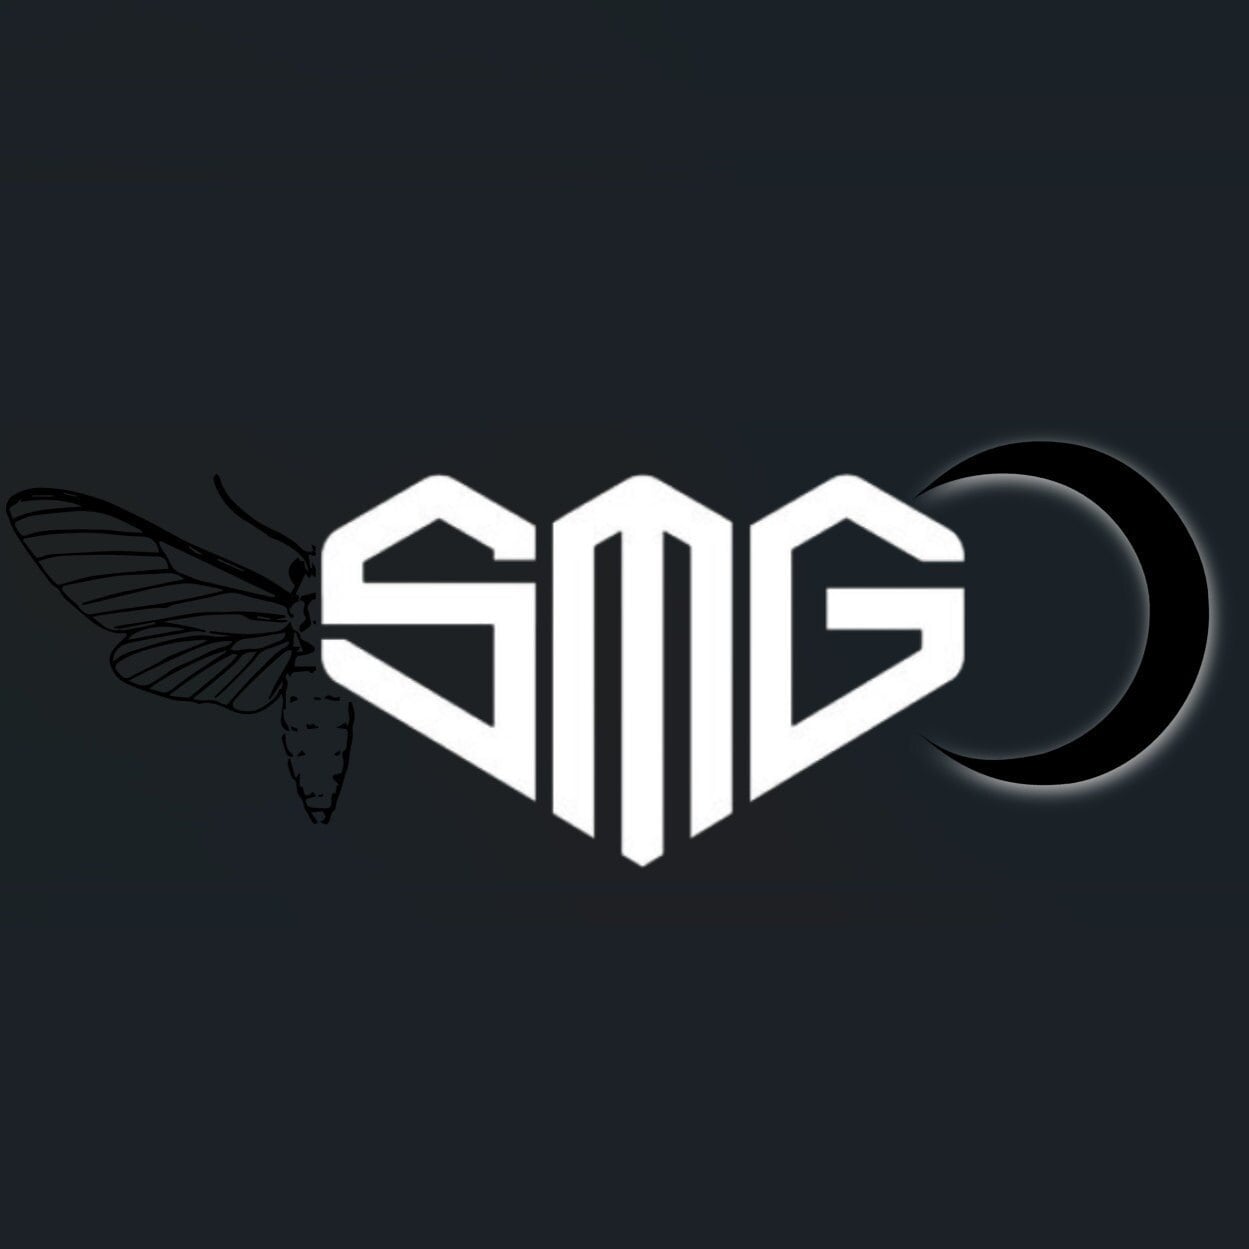 Gm monogram logo with diamond shape and ring Vector Image